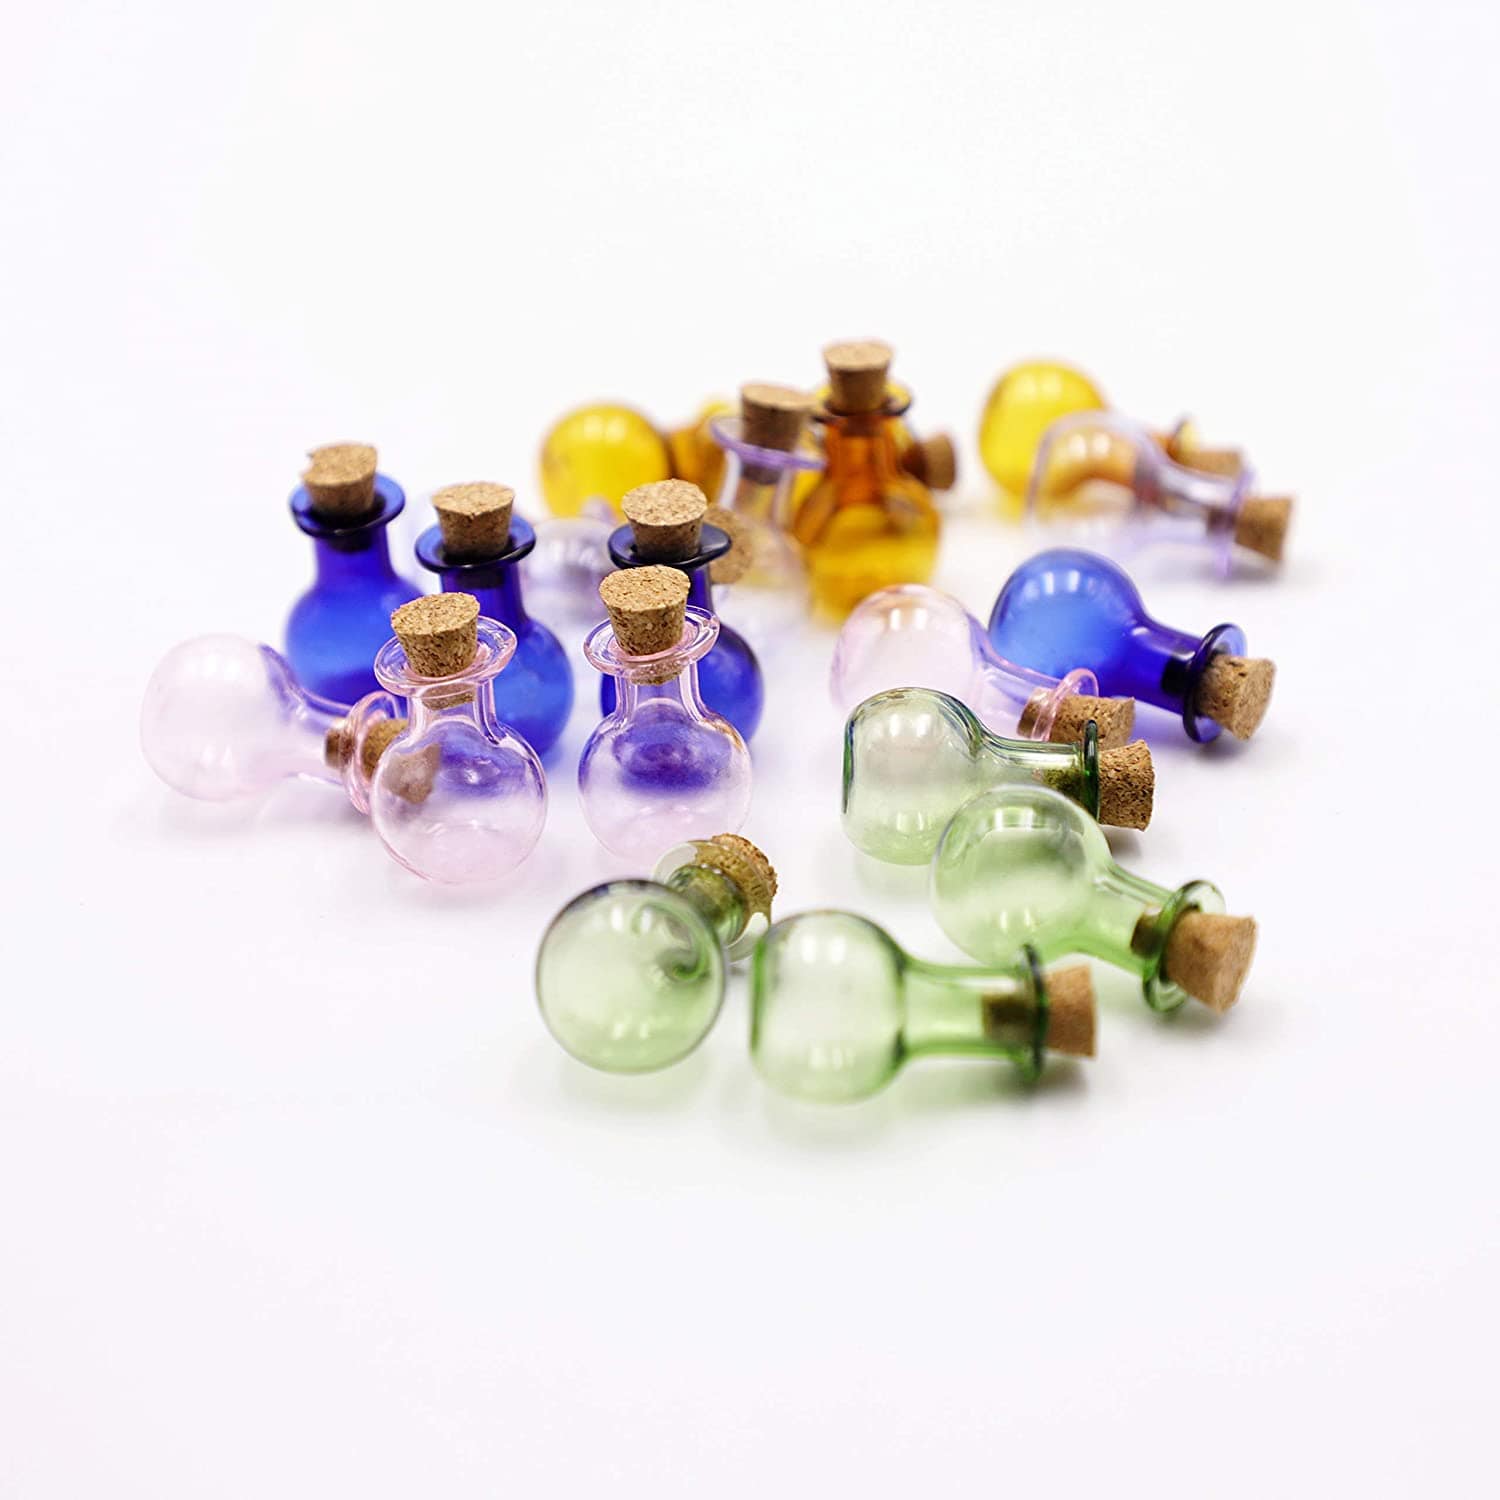 Small Glass Bottles, Colored Glass Bottles